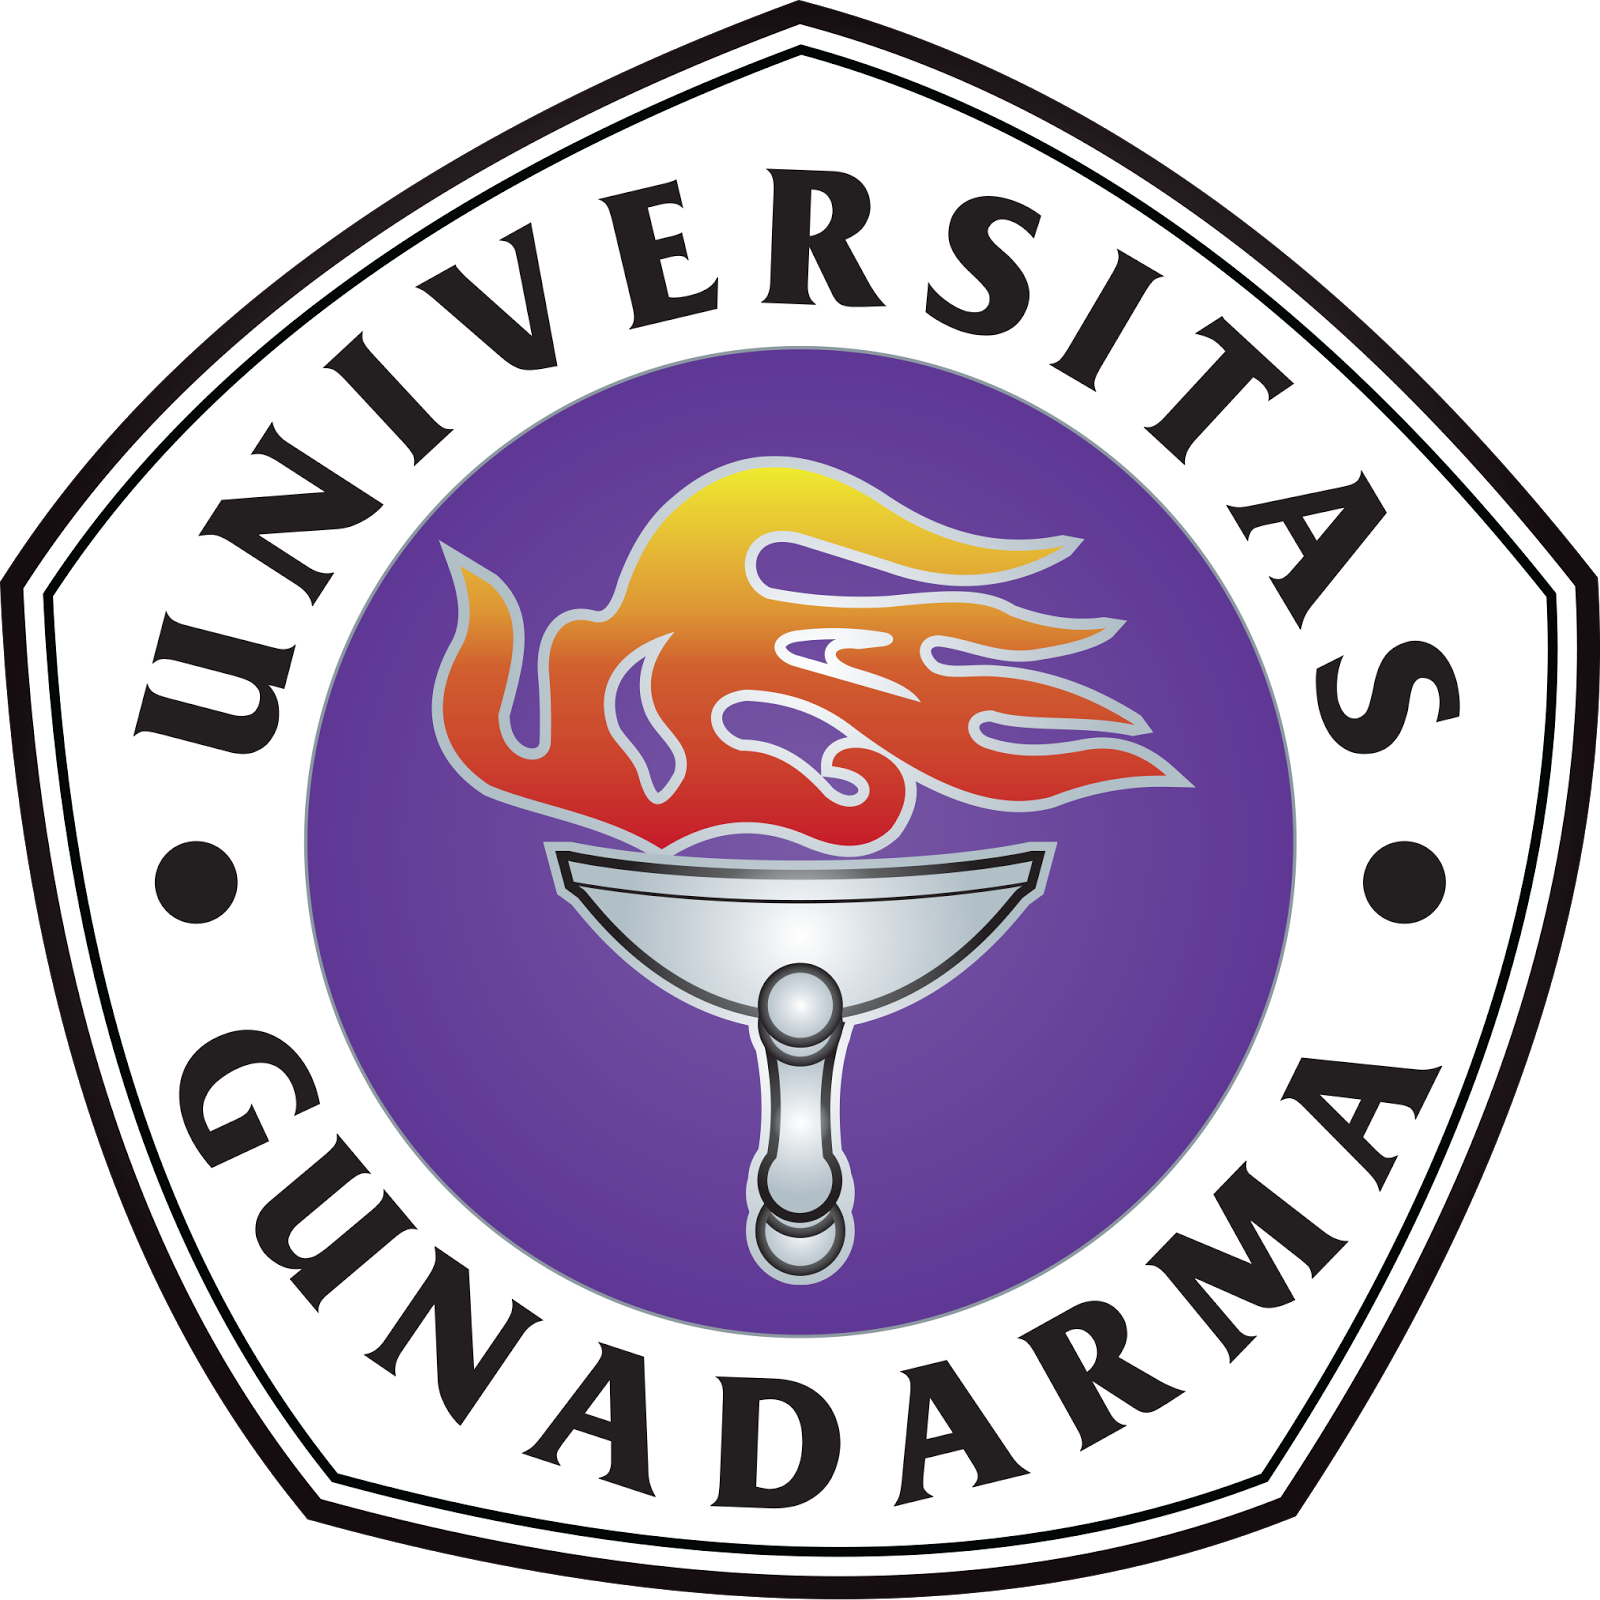 Mendesain Ulang Logo  Gunadarma IPK Ilmu Pelajaran Komputer 